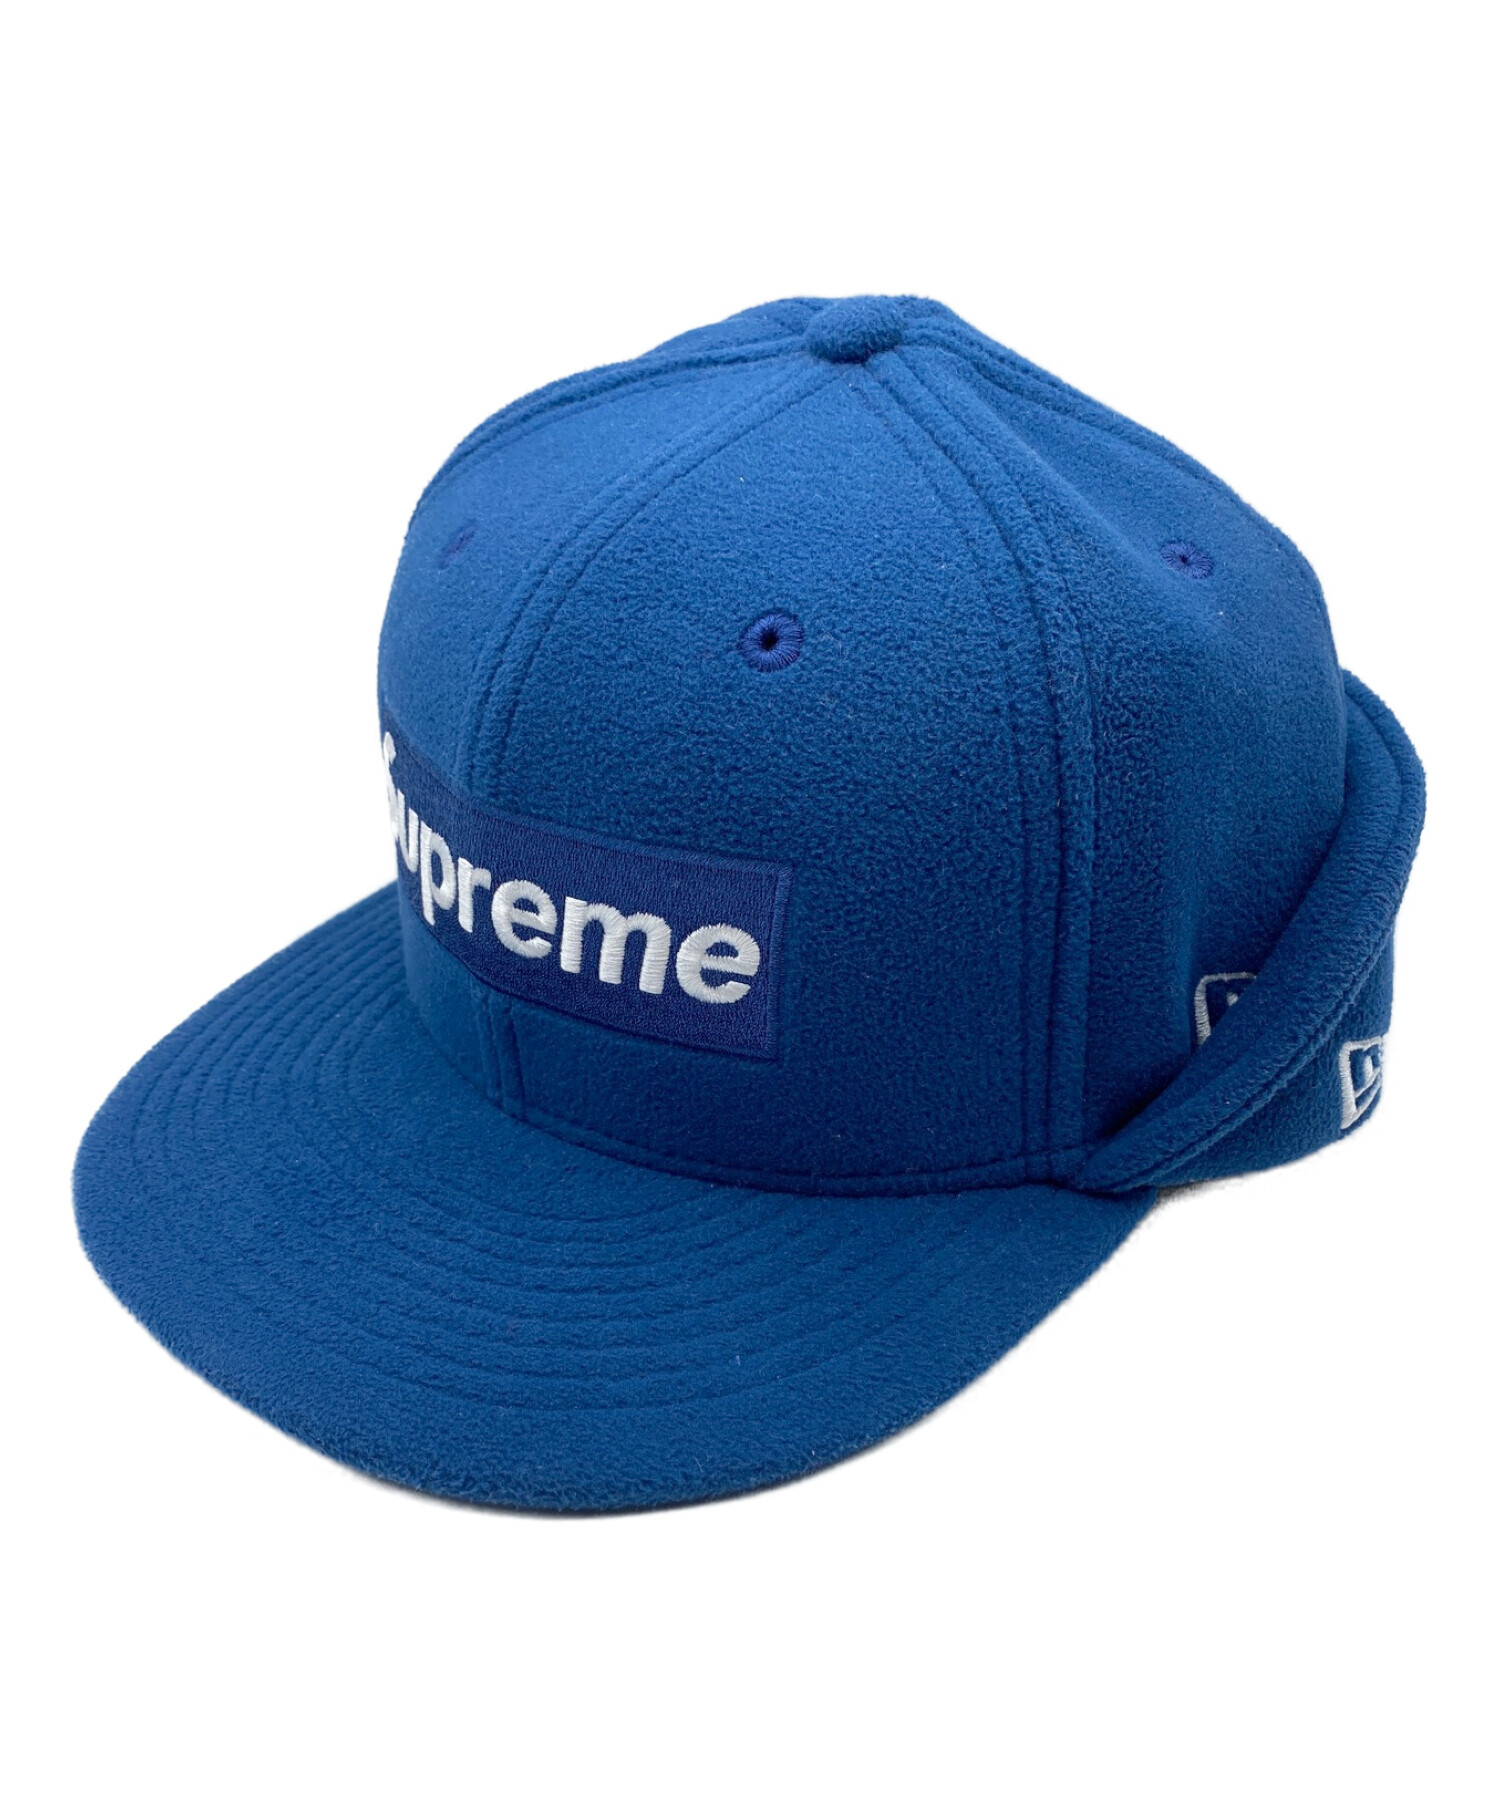 Supreme newera cap polartec fleece cap帽子